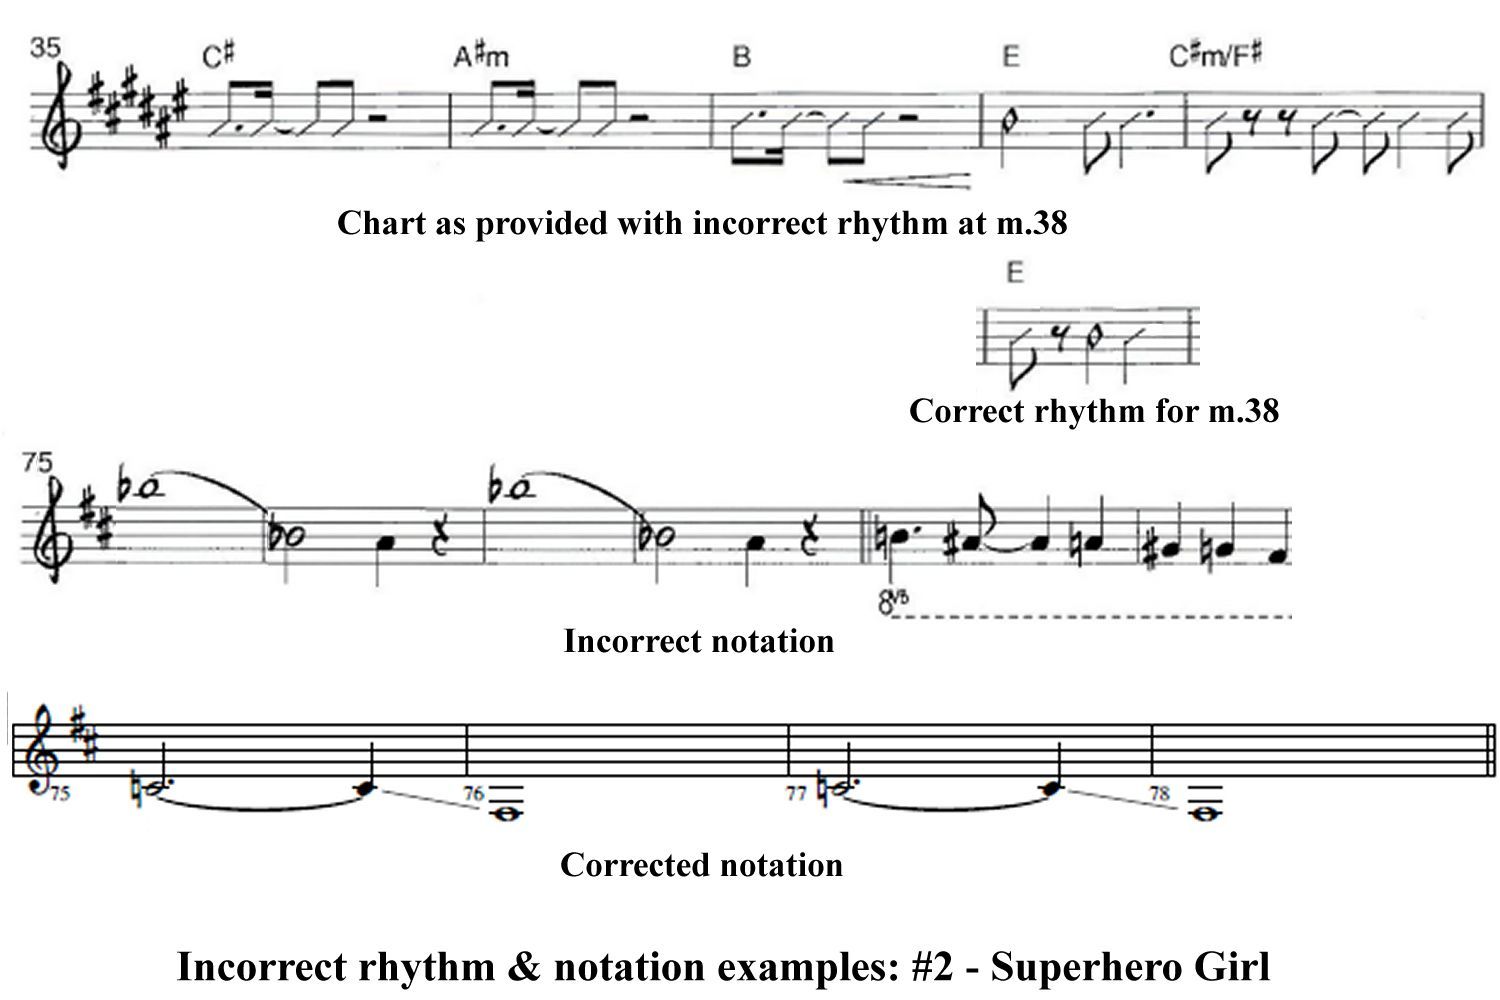 Starmites-rhythm-notation-error-examples